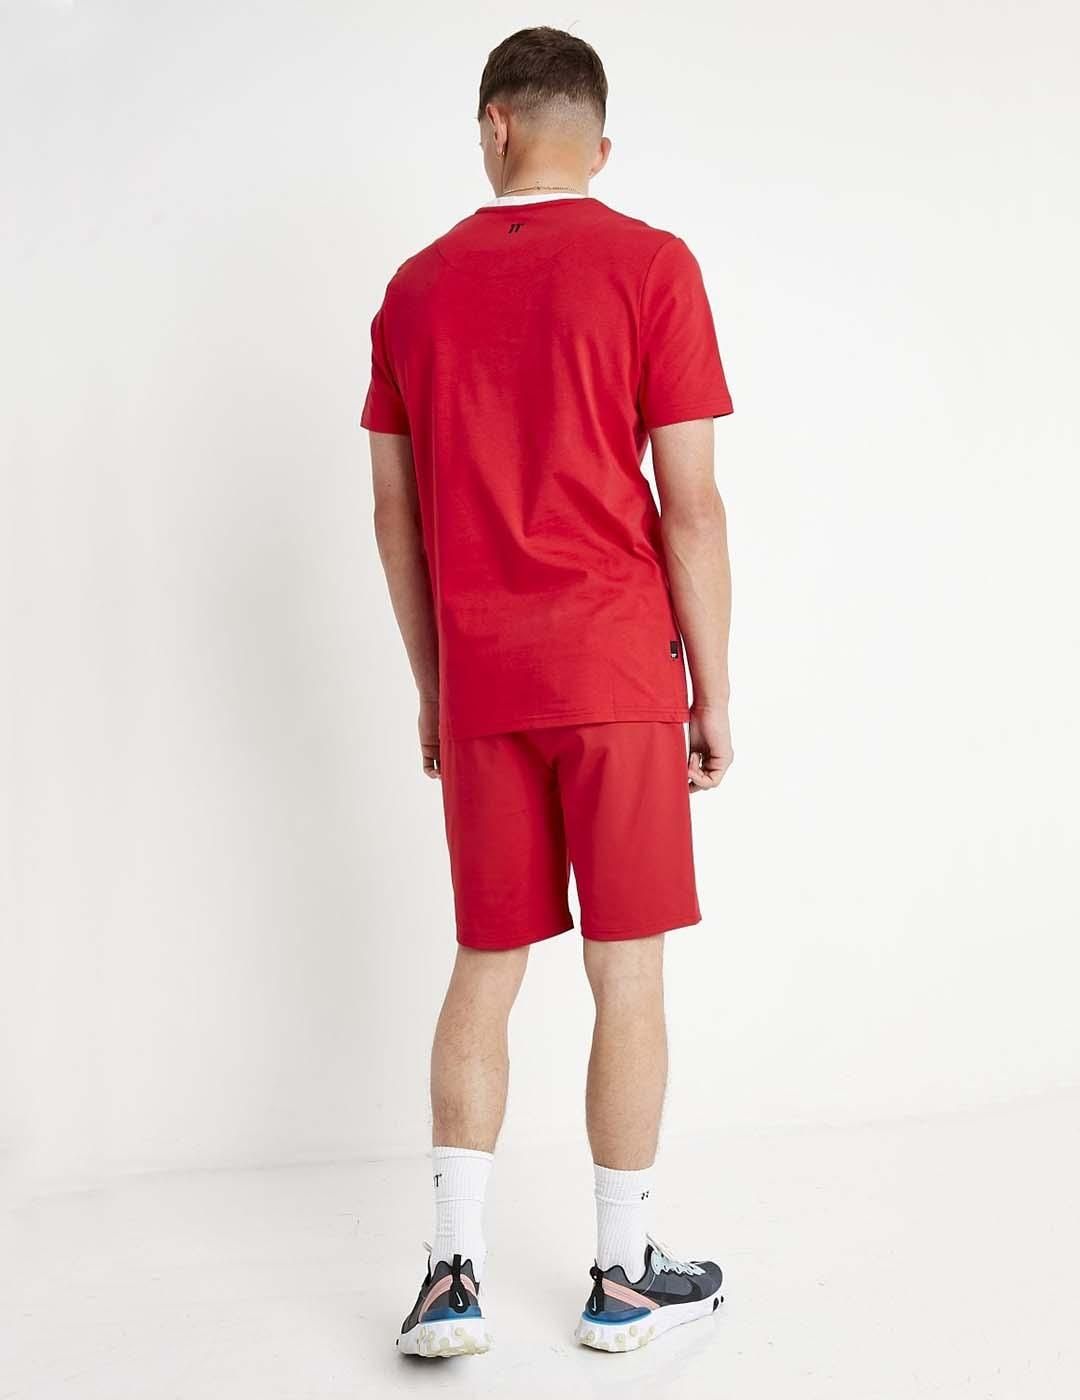 Camiseta 11 Degrees Cut And Sew Rojo - Bicos de Fío